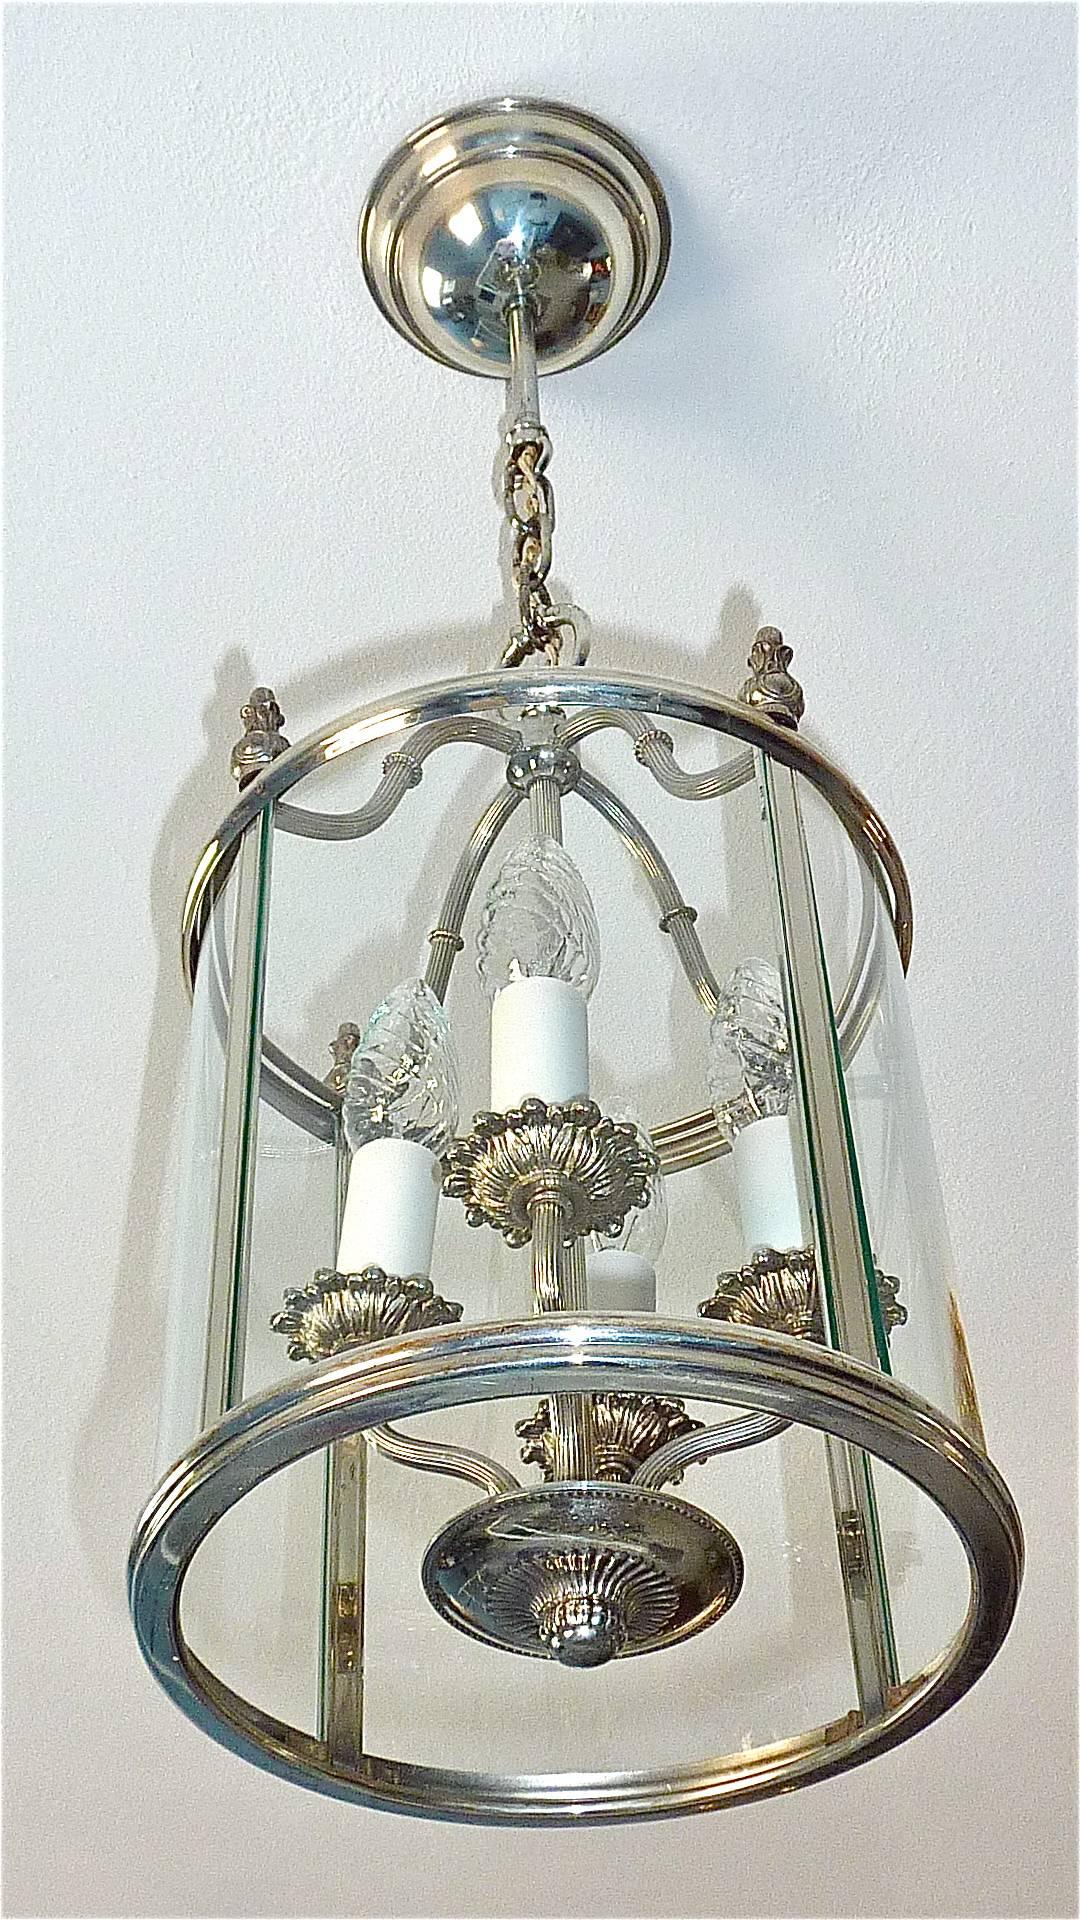 Signed and beautiful silvered brass lantern or pendant lamp made by the Italian designer Gaetani Sciolari circa 1960-1970 in Italy. The fabulous of vintage light takes four E14 European standard screw bulbs to illuminate. The lantern looks like a